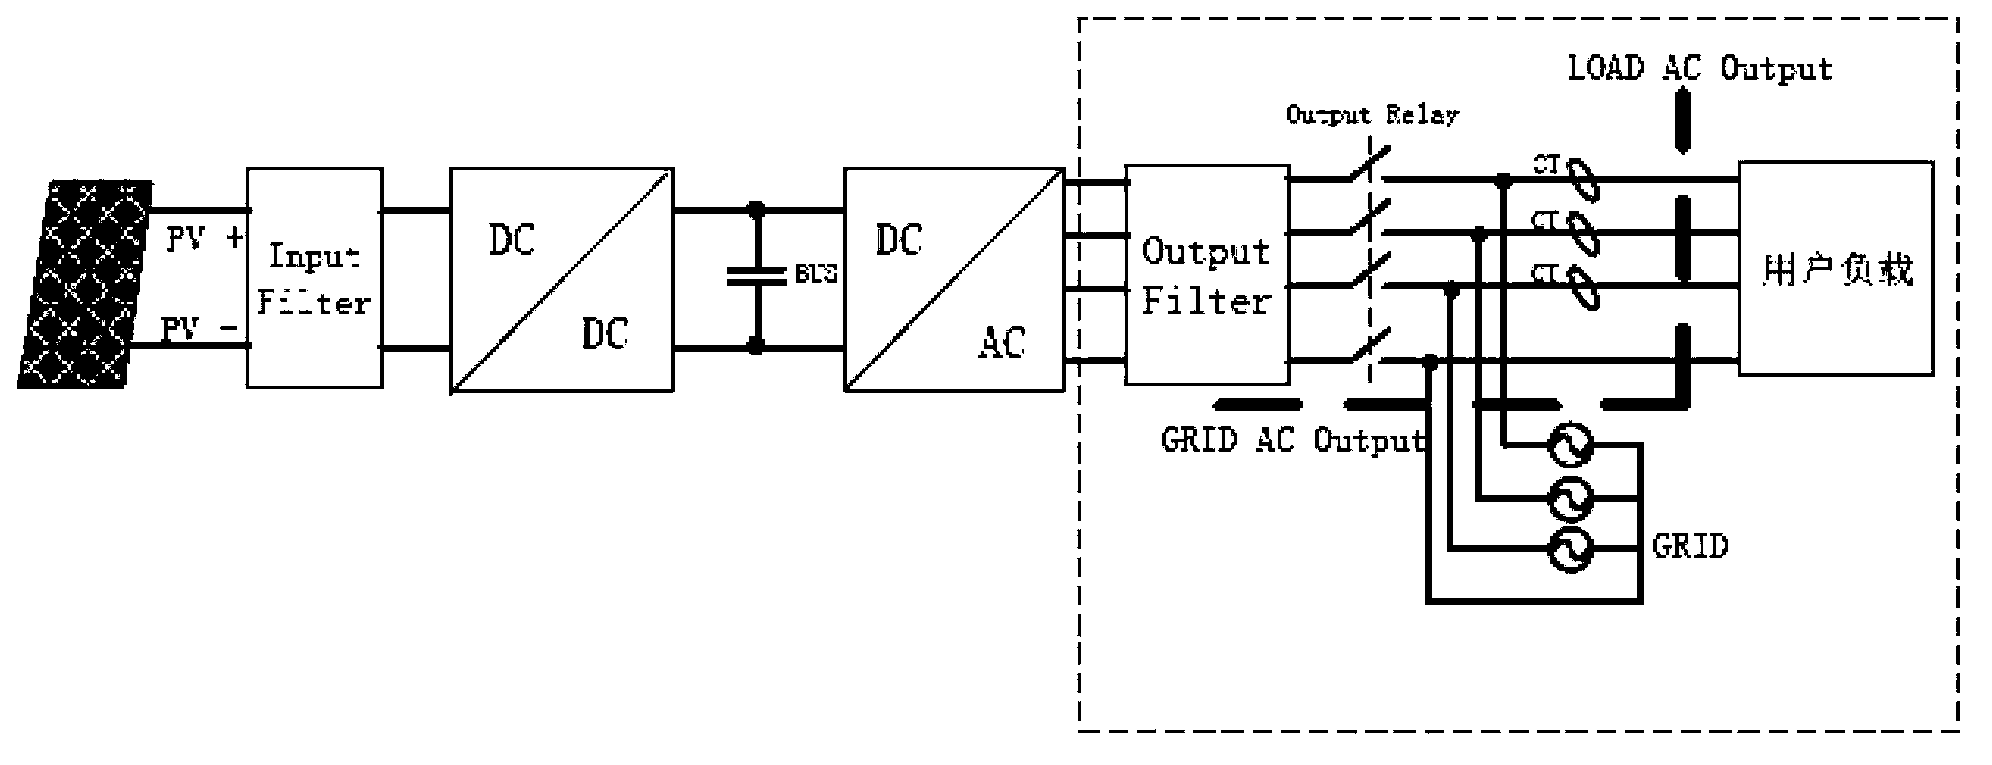 Grid-connected inverter